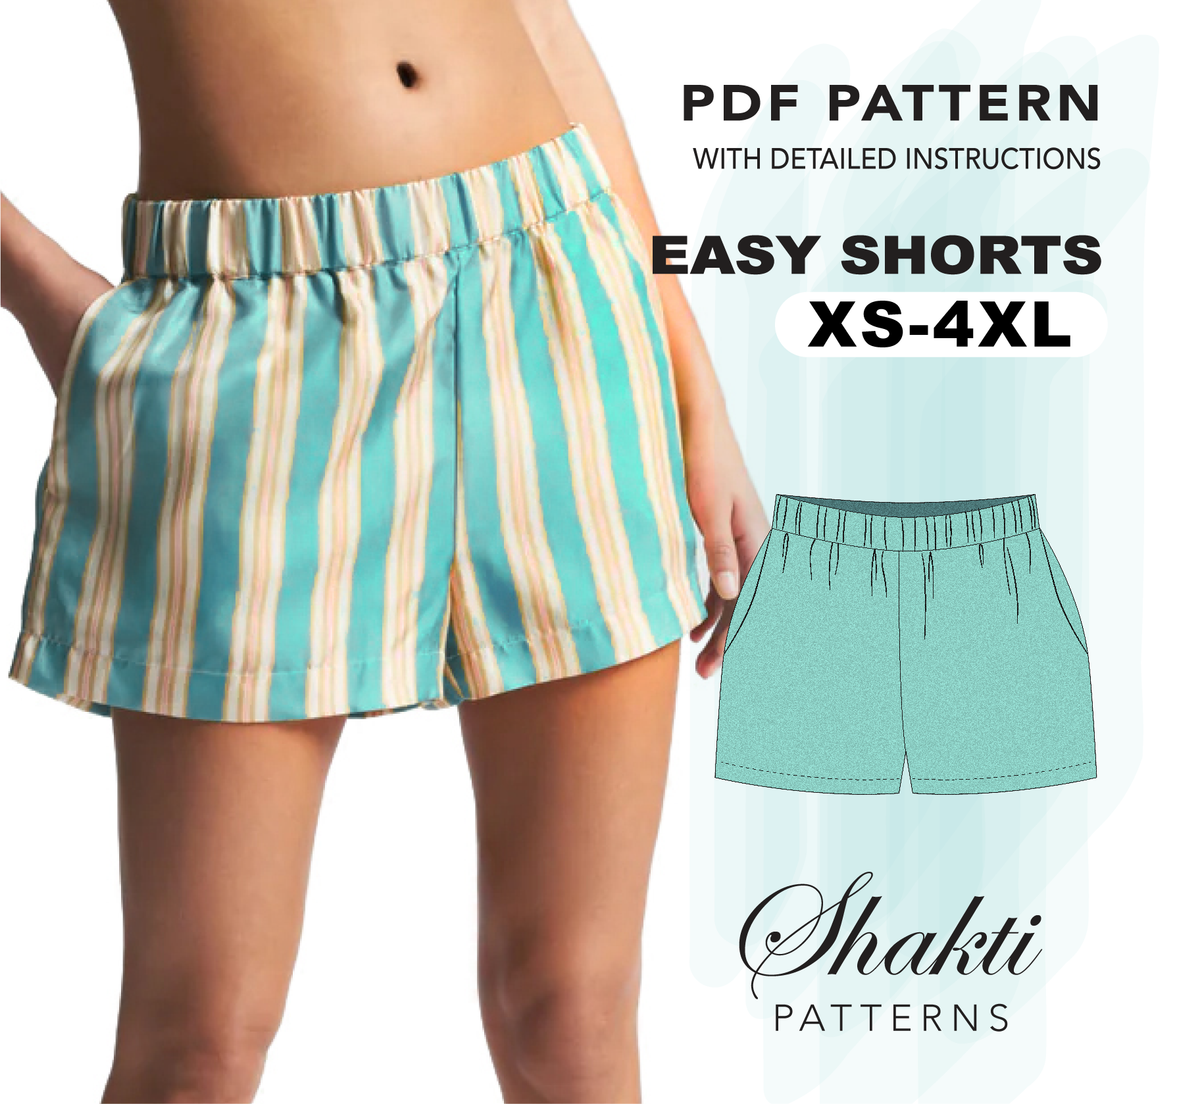 Shakti Jersey Pants Sewing Pattern Release and Sale - Seams Sew Lo